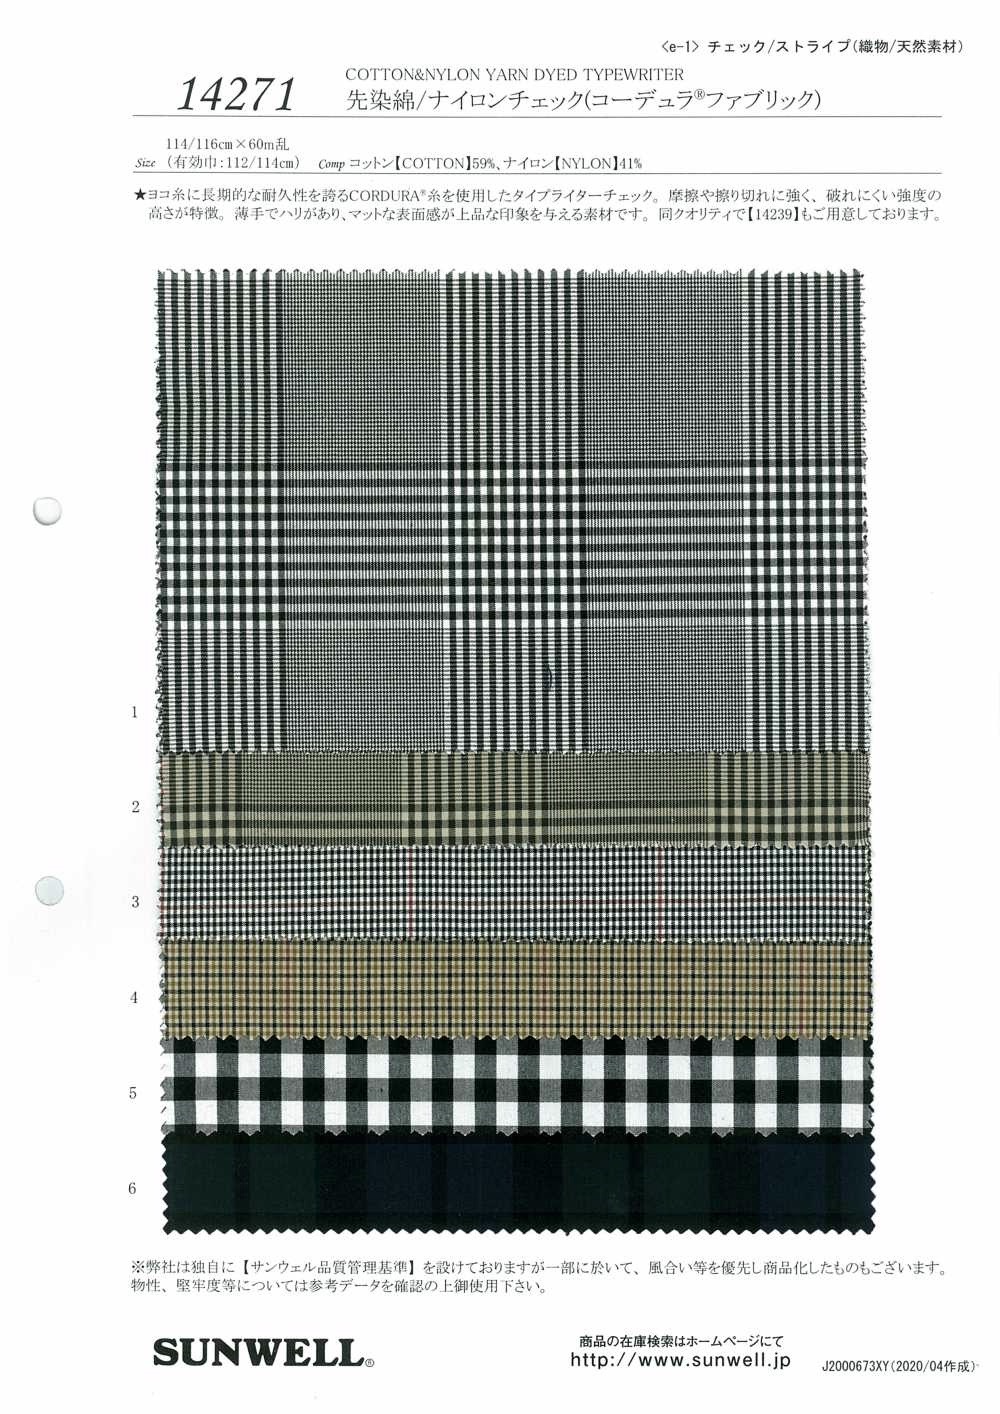 14271 Cuadros De Algodón / Nailon Teñidos En Hilo (Tejido Cordura (R))[Fabrica Textil] SUNWELL